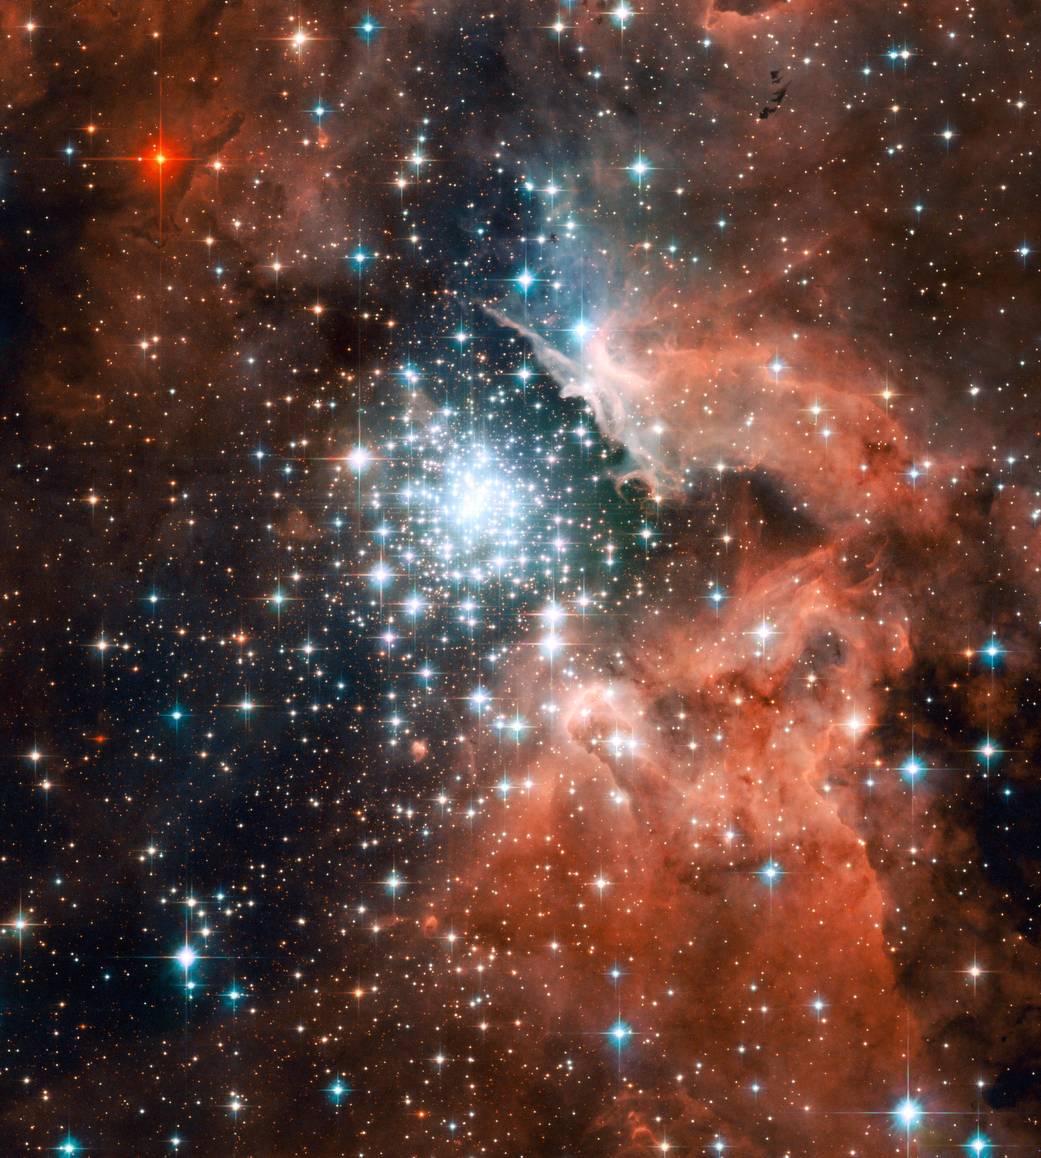 The Giant Nebula, NGC 3603